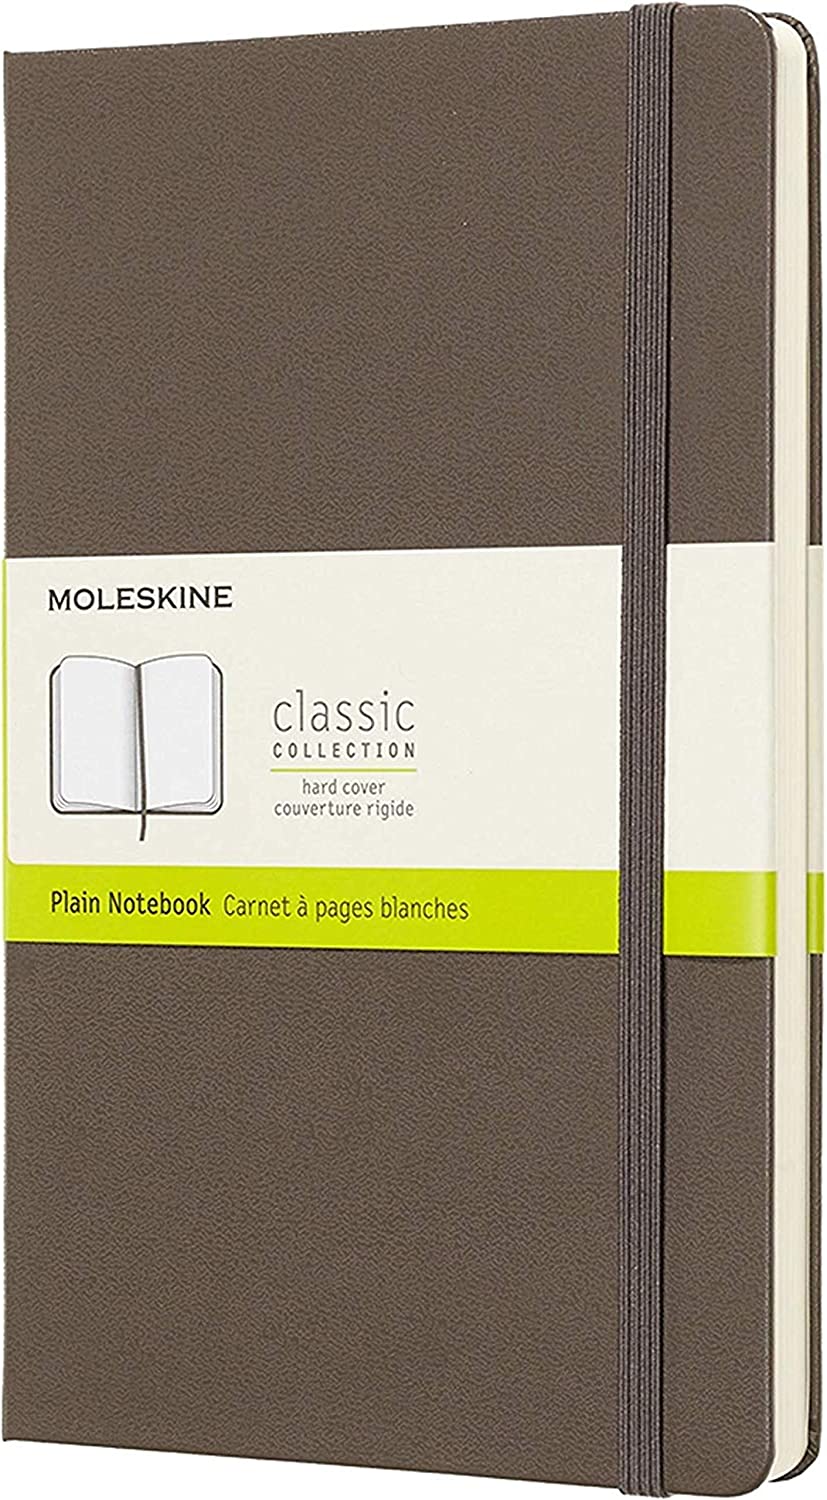 Moleskine Papir Pocket / Brown / Hardcover Moleskine Classic notesbog - Plain